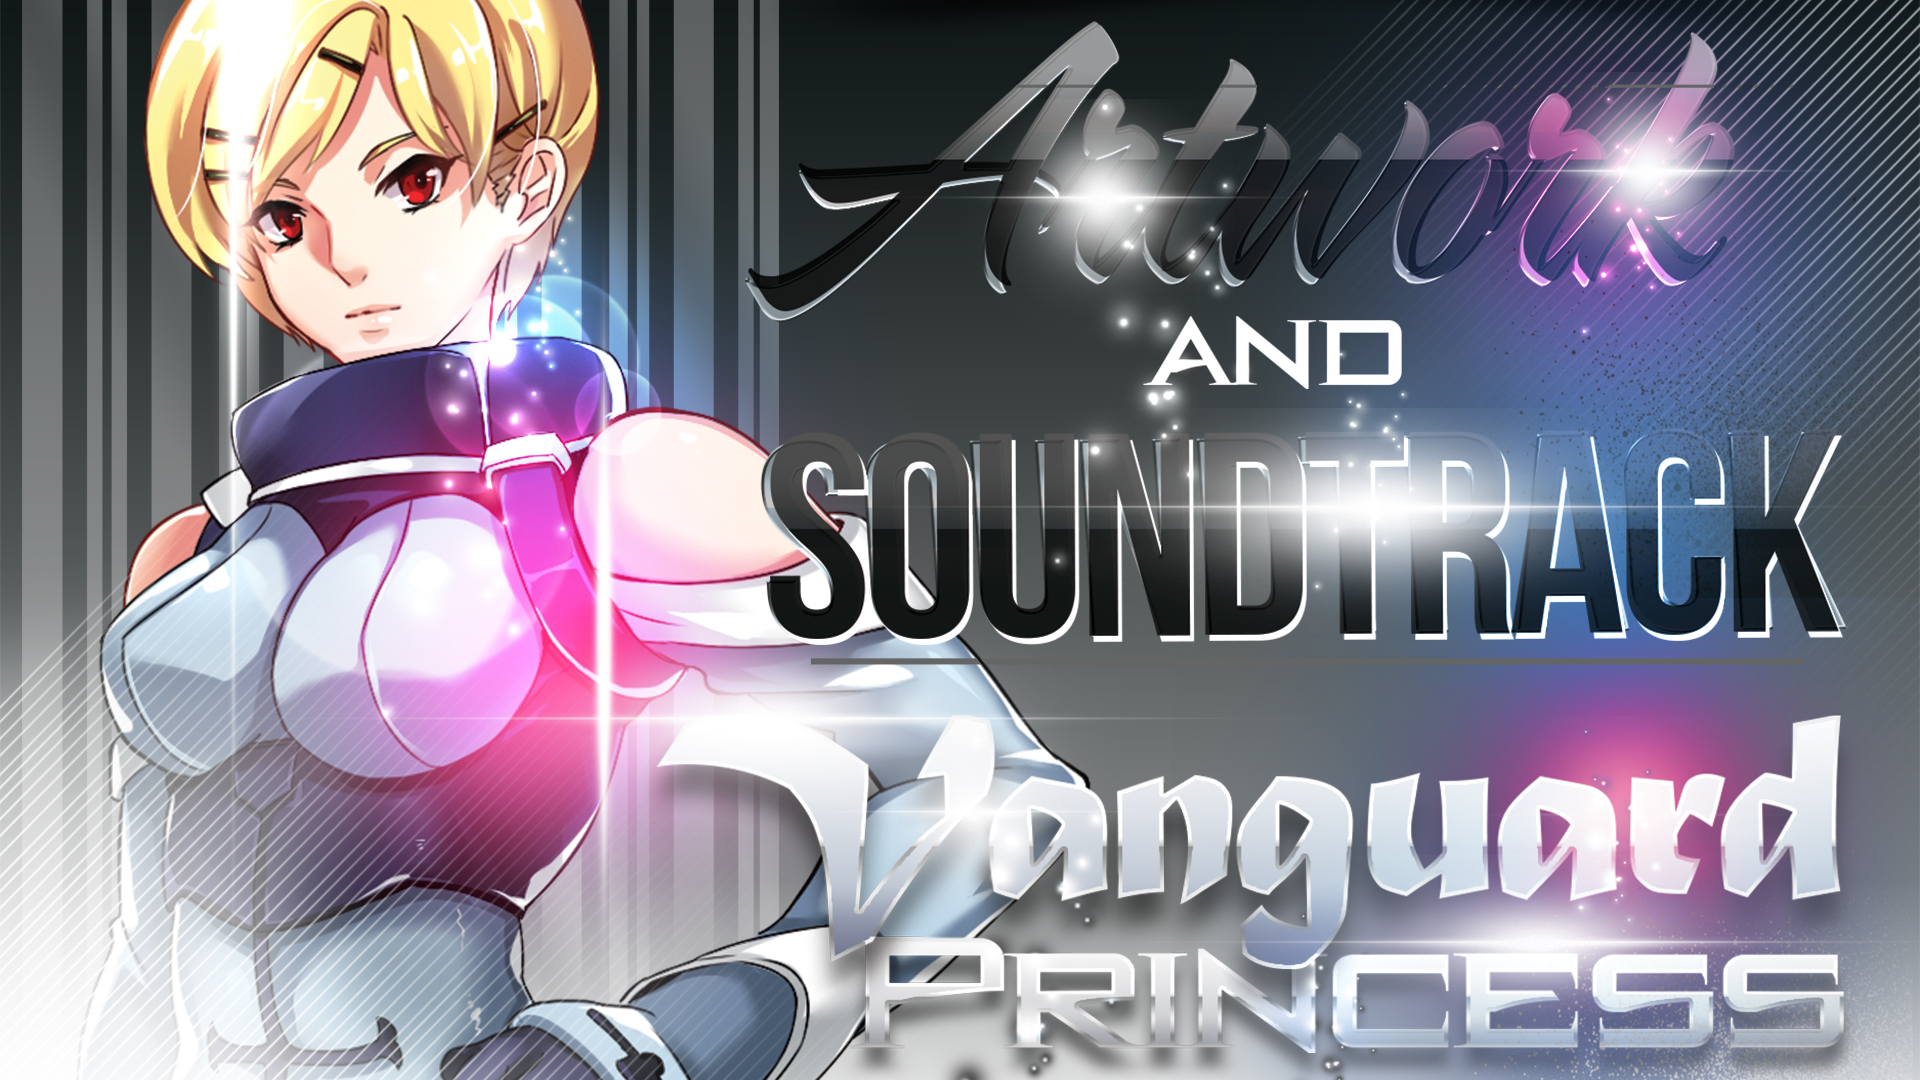 Vanguard Princess Artwork and Soundtrack screenshot